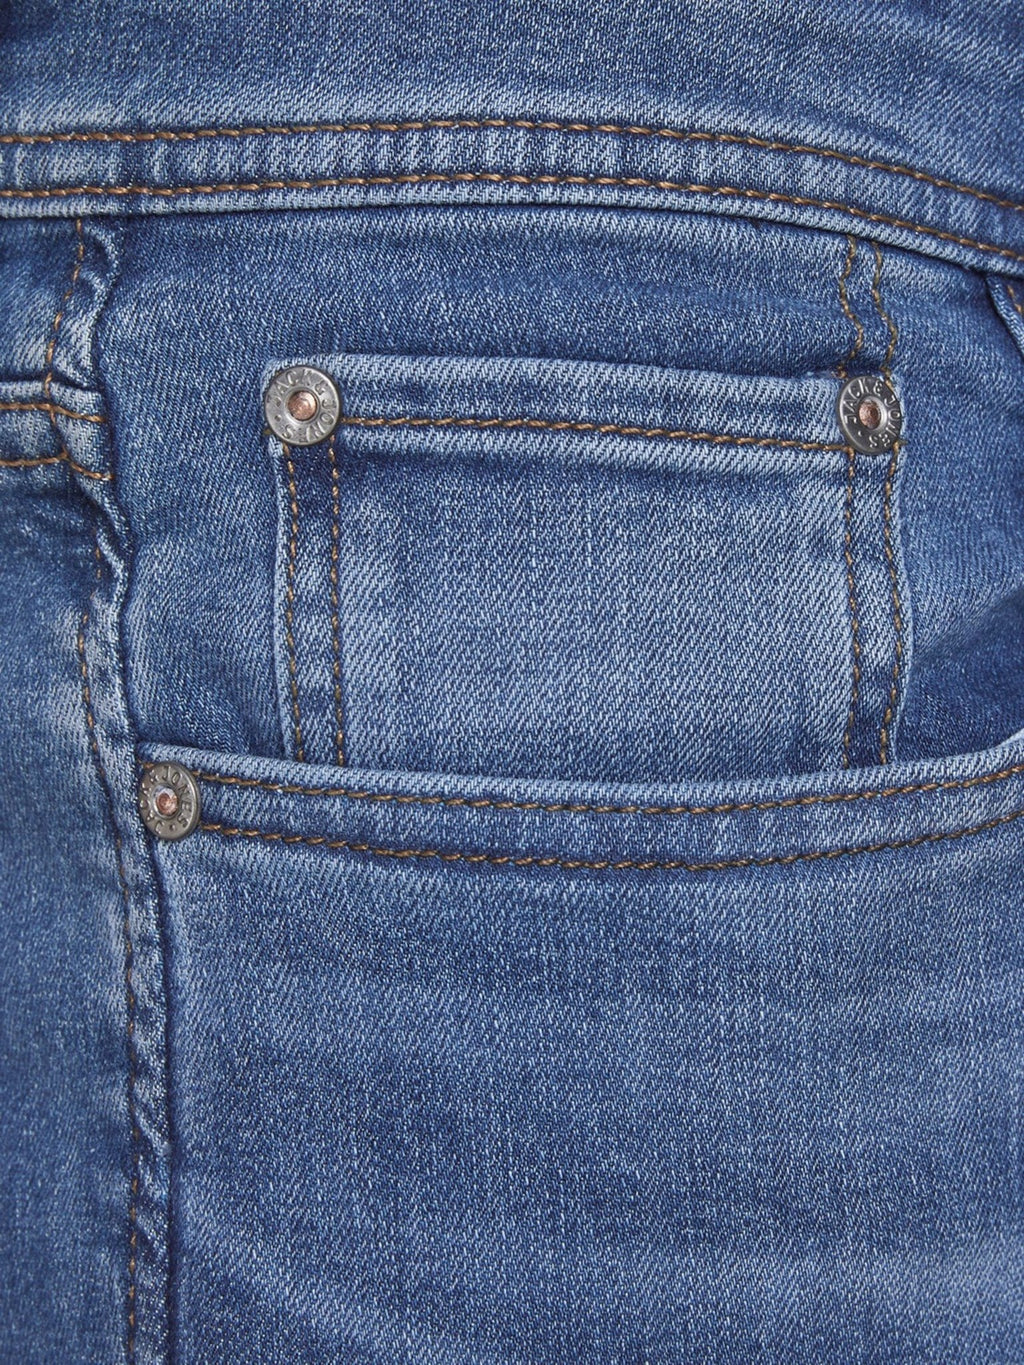 Glenn Bunaidh 815 Jeans - Denim Blue (Fit caol)